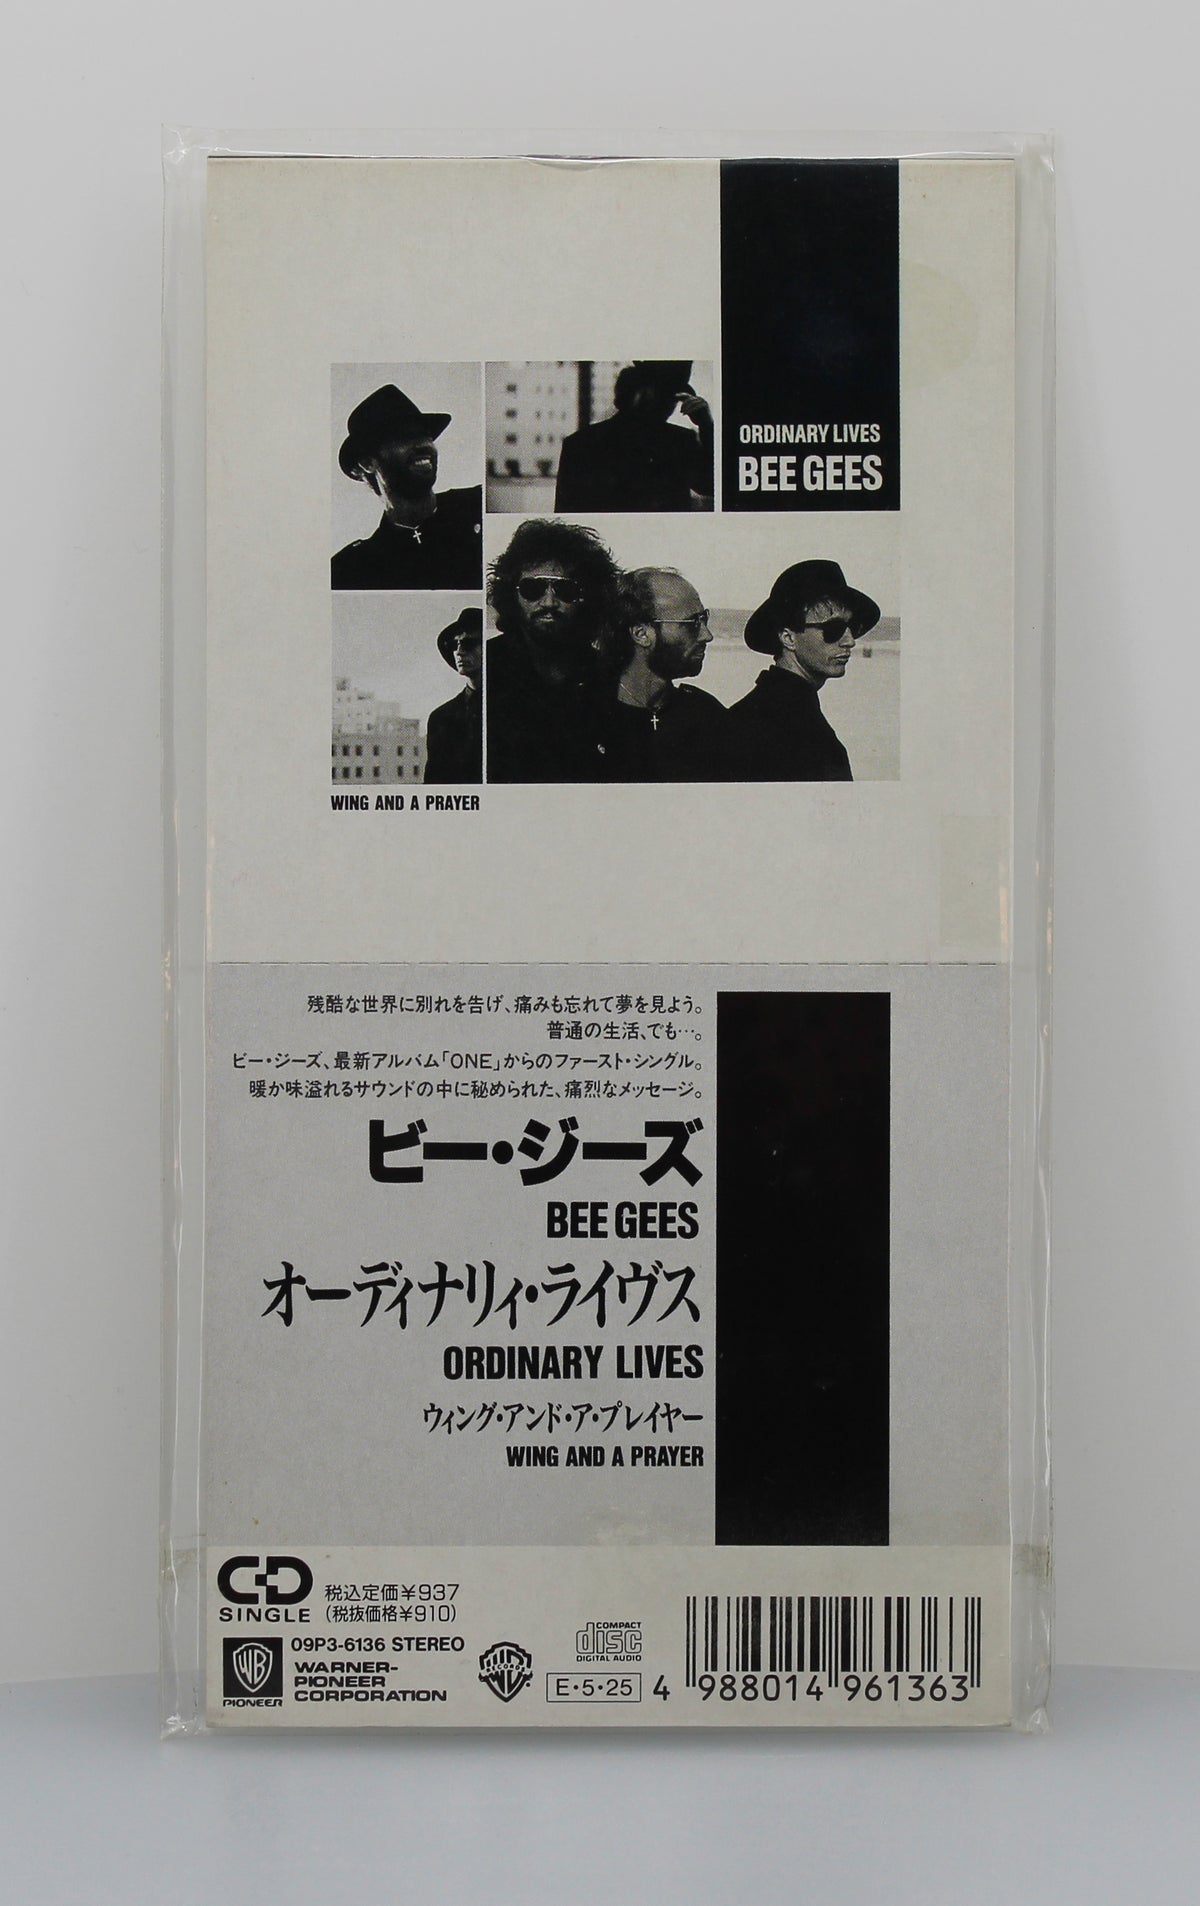 Bee Gees – Ordinary Lives, CD, Single, Mini, Japan 1989